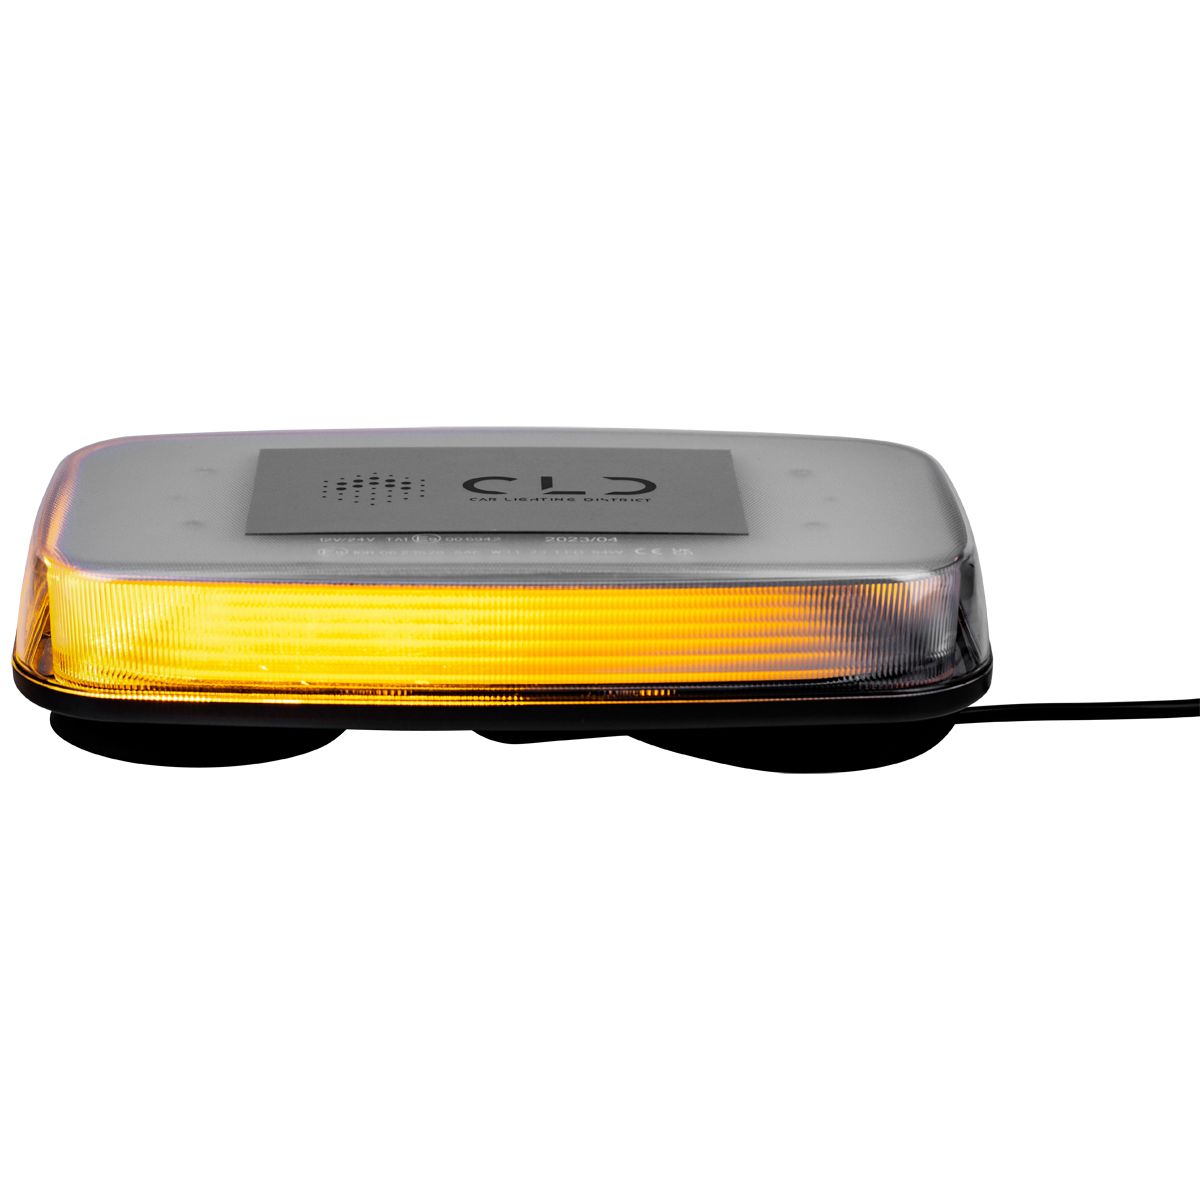 CLD CLDEM12 - 12" Emergency Amber LED Strobe Light with 26 Flash Patterns - 2000 Lumens